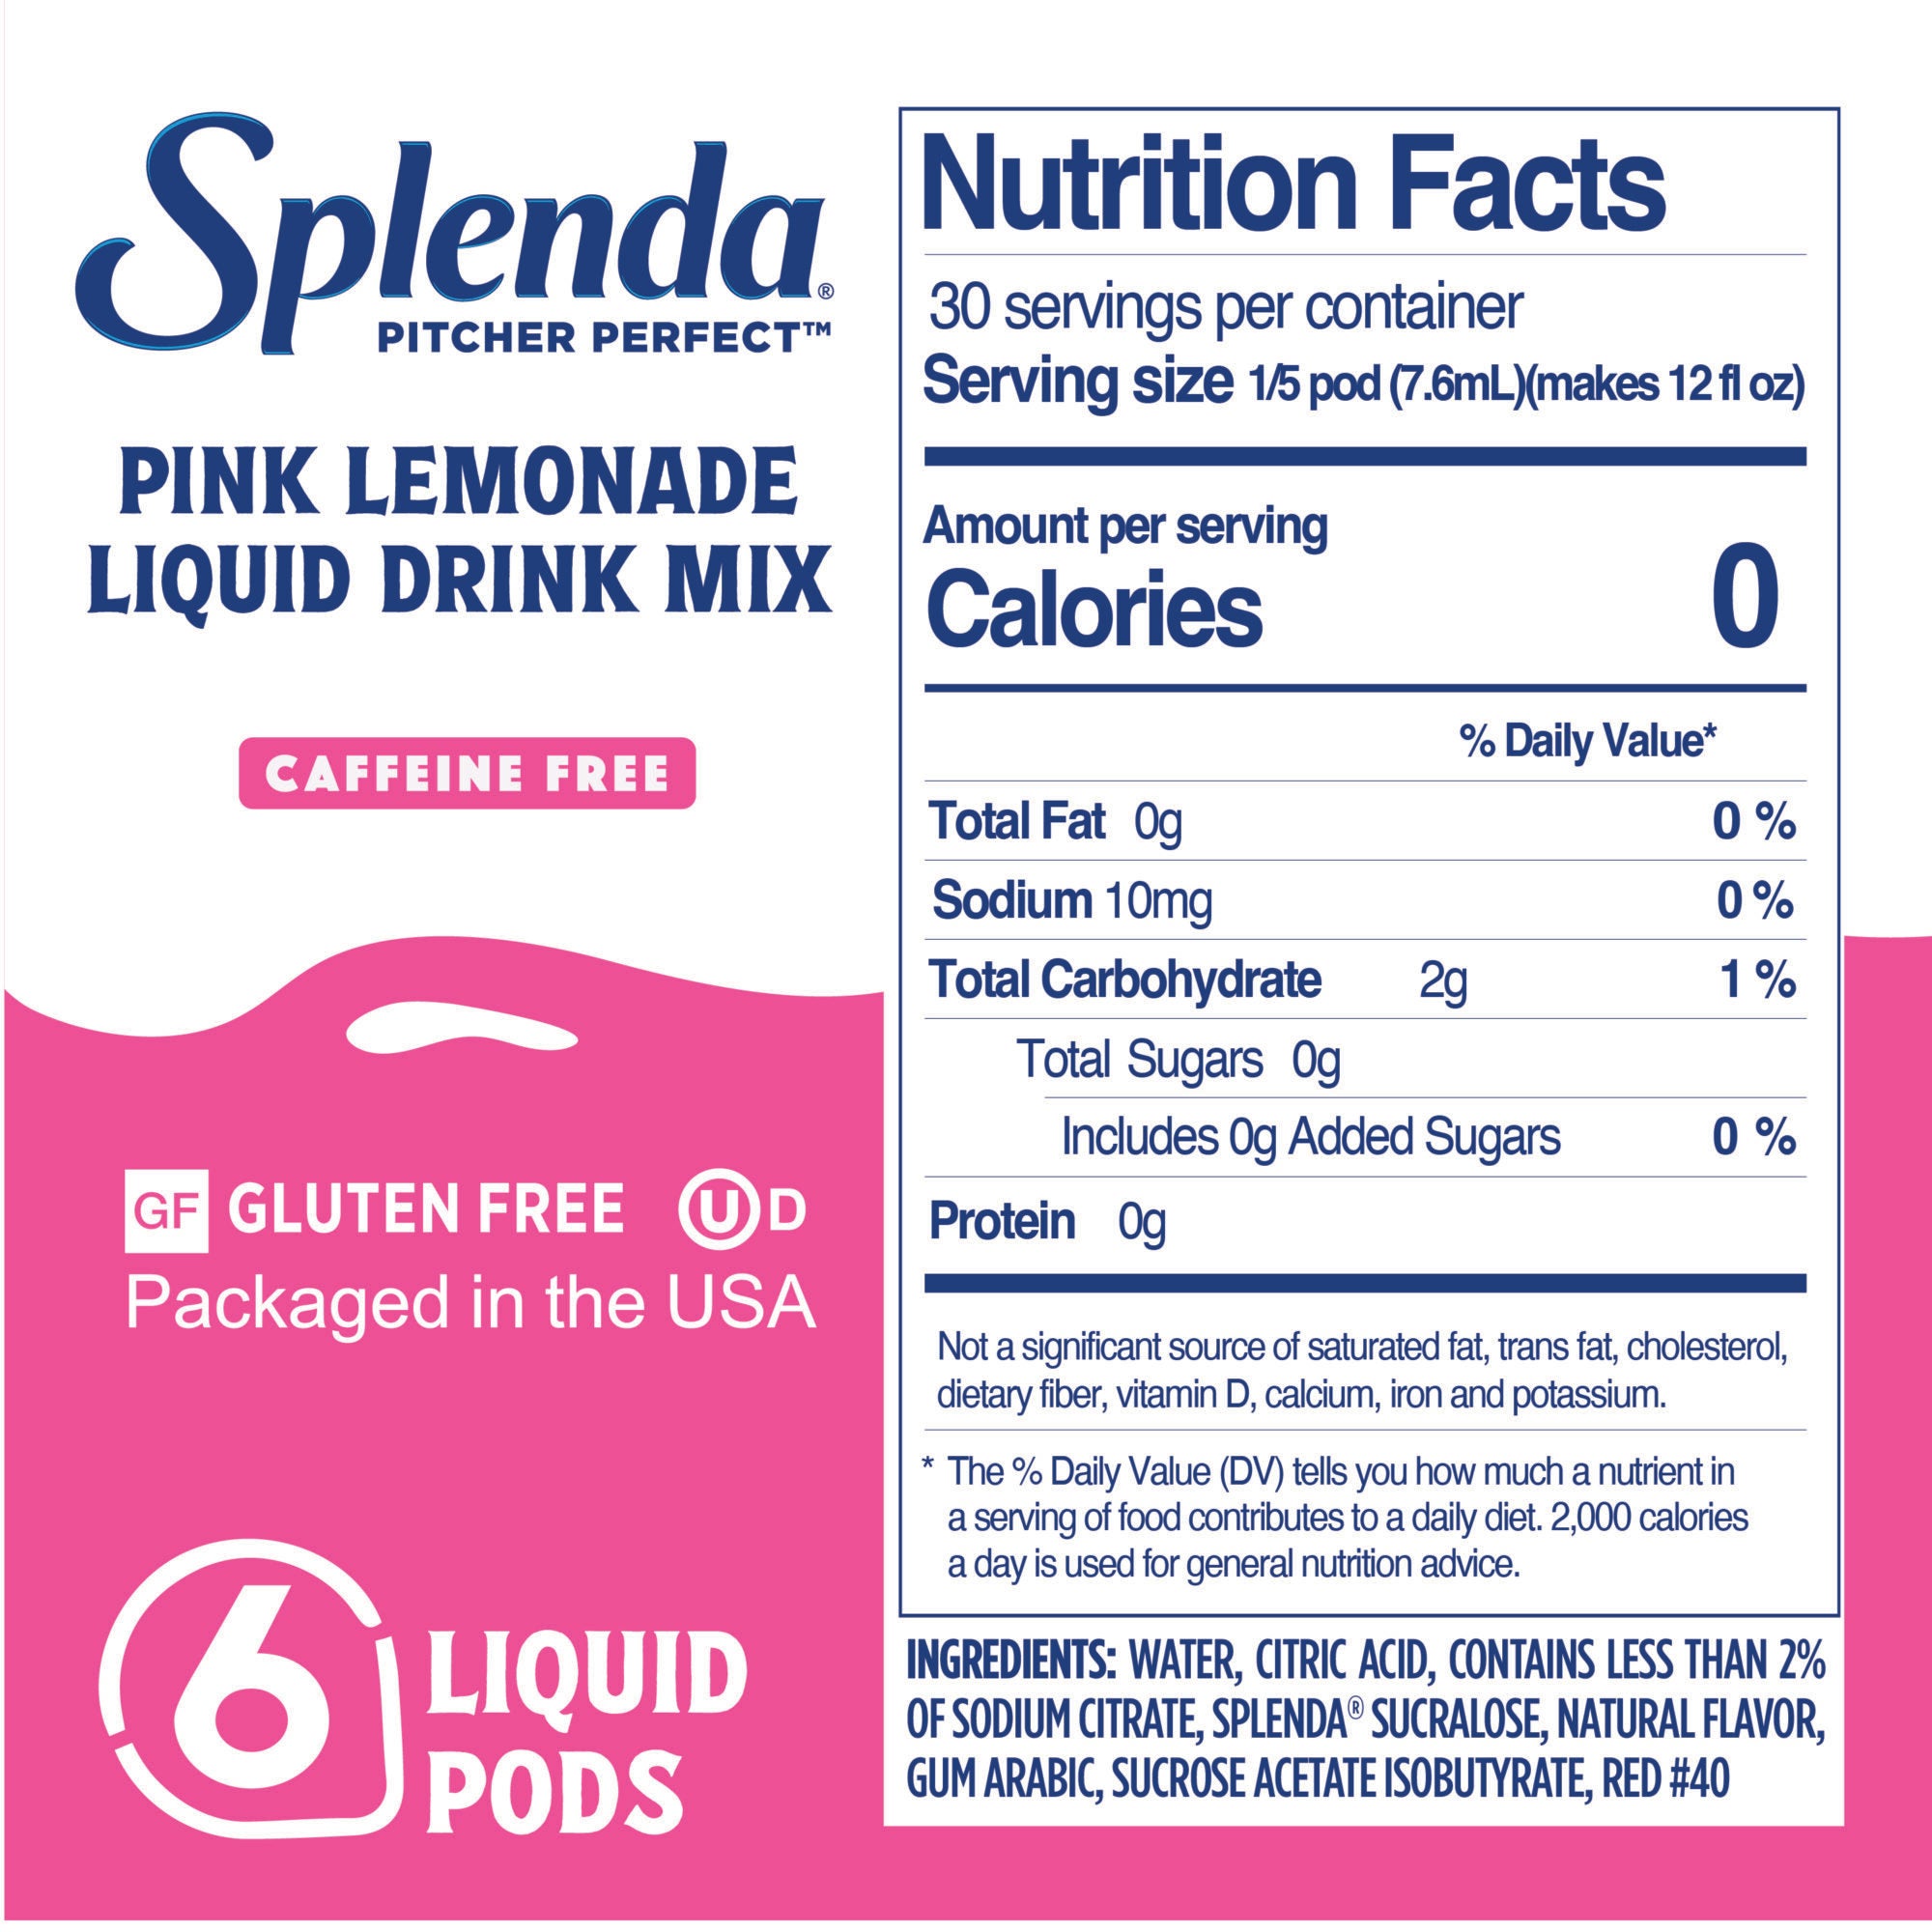 Splenda Pitcher Perfect Mezcla de Bebidas sin Azúcar, Limonada Rosa, información nutricional